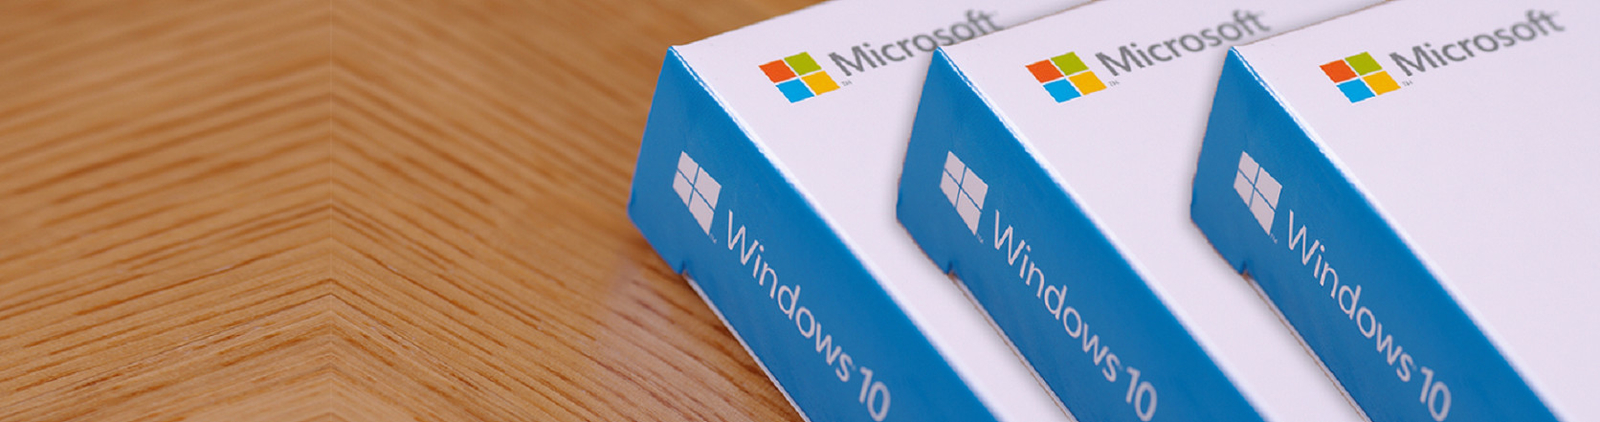 Microsoft Windows 10 Beroeps